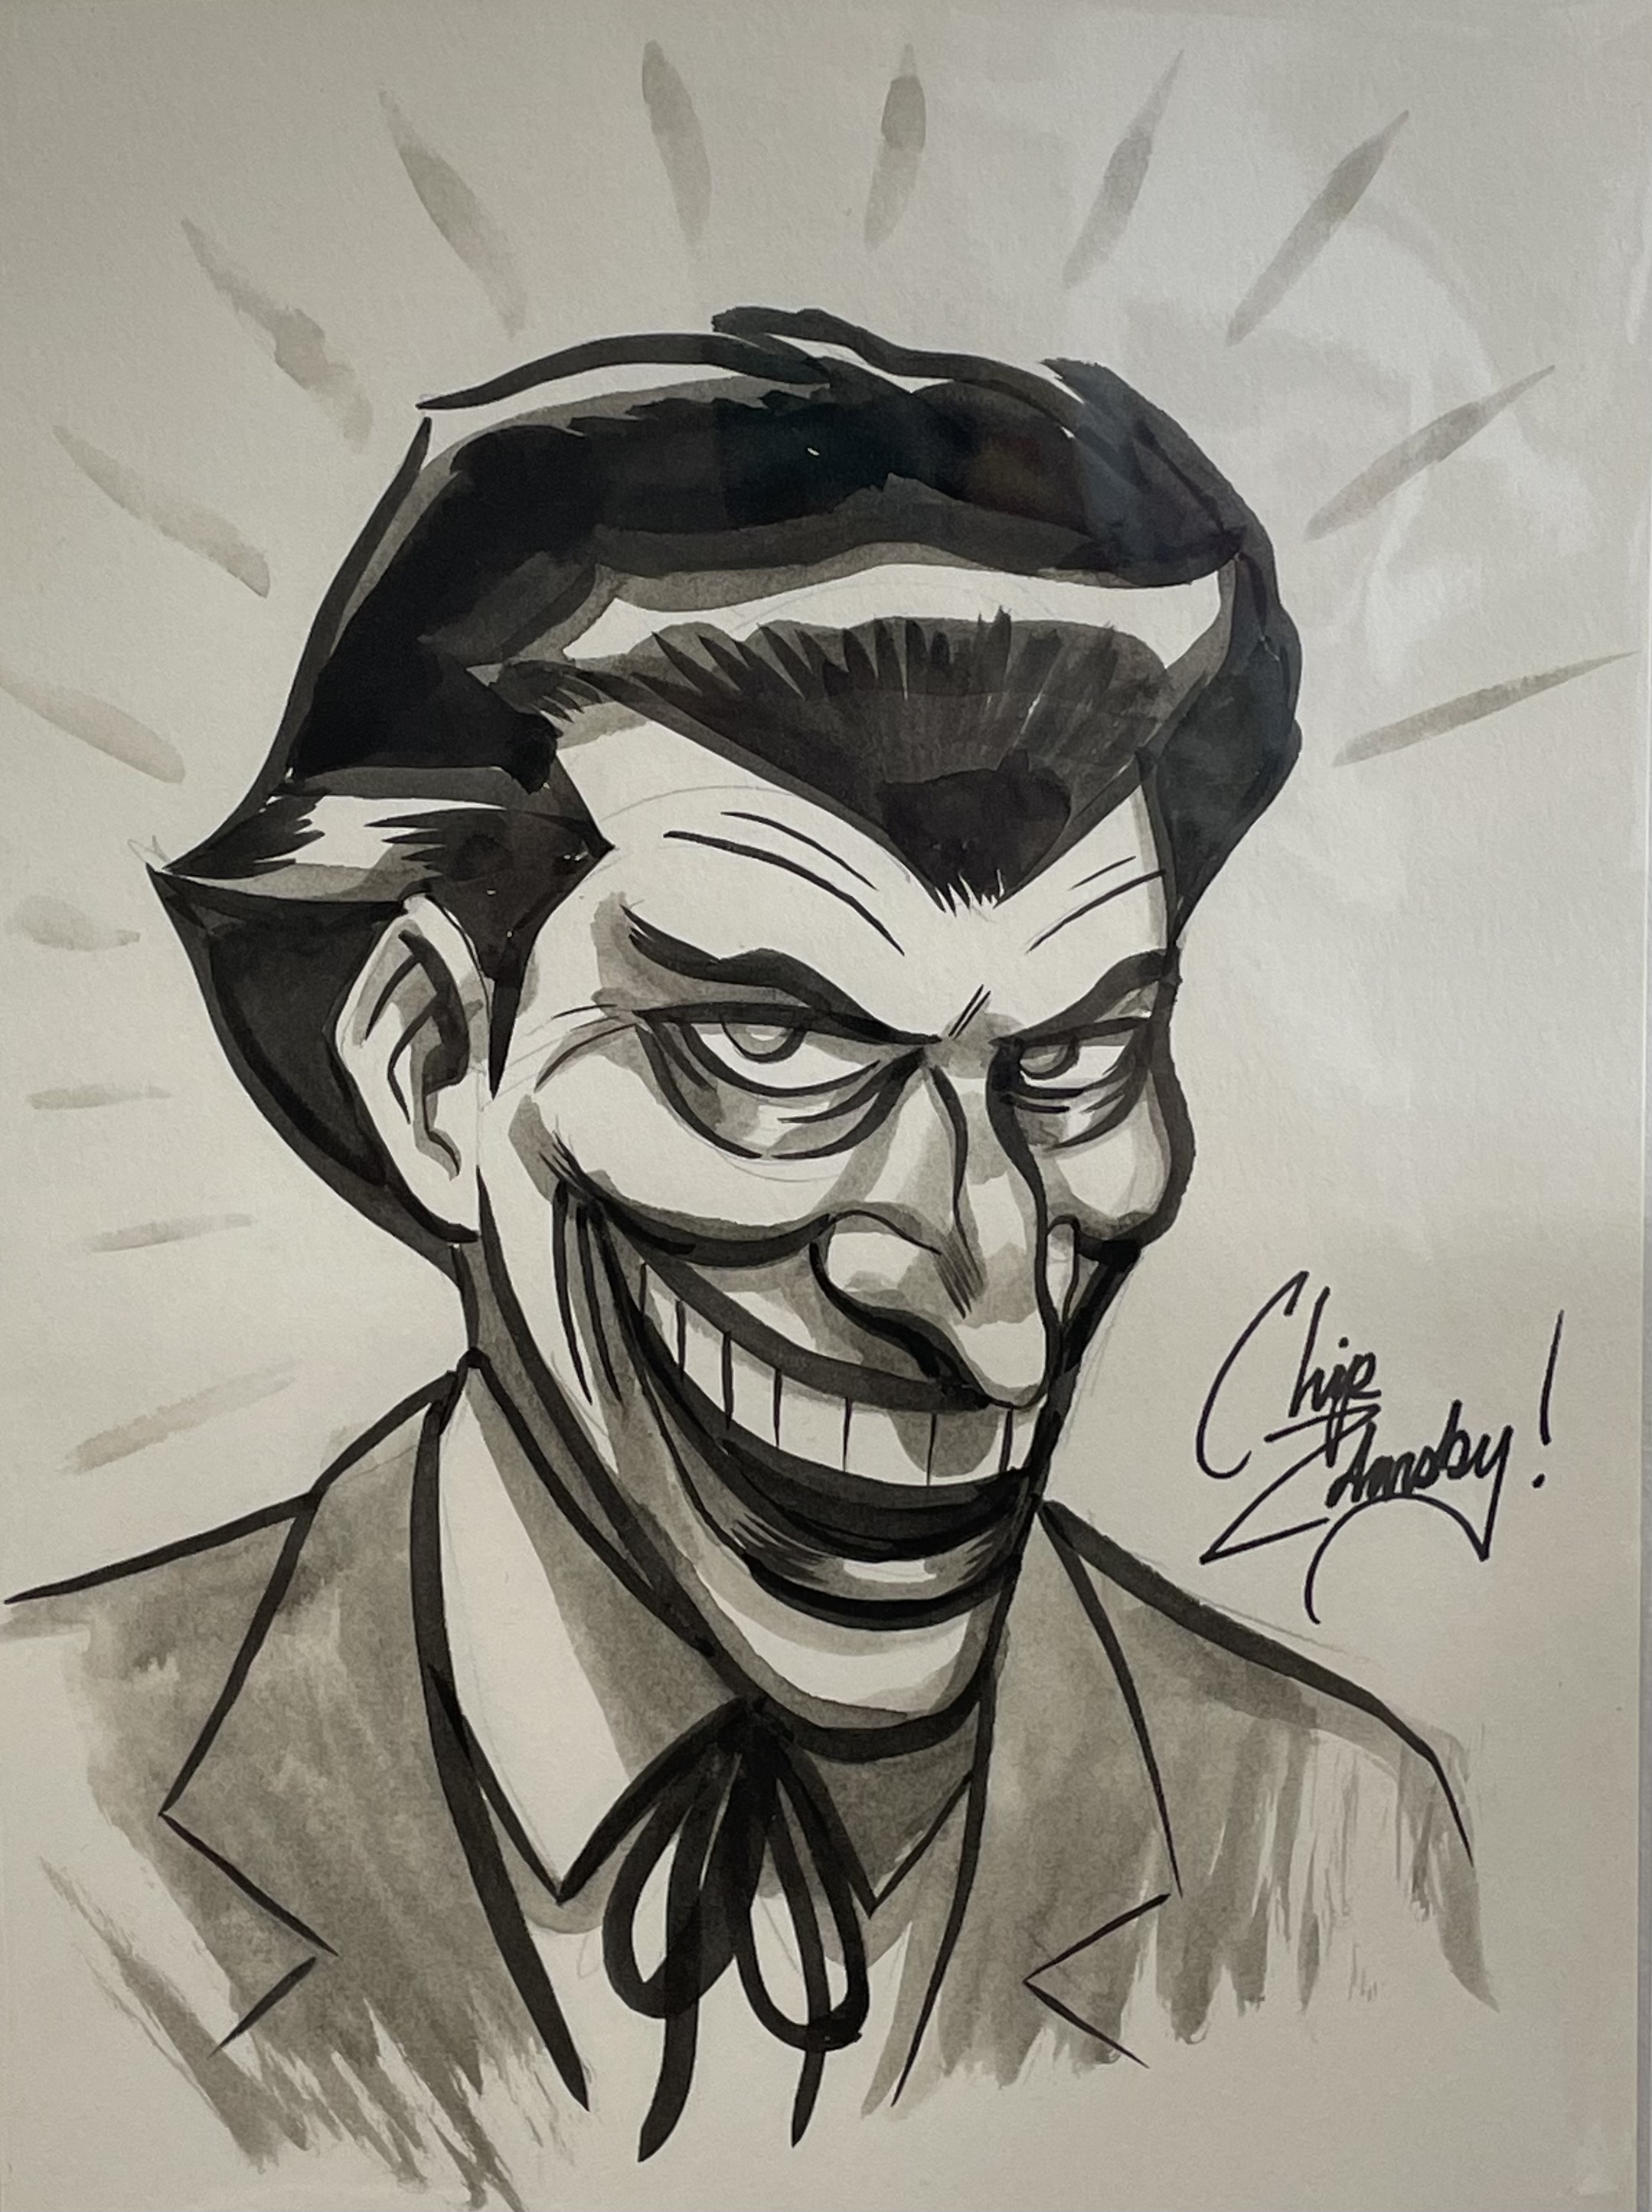 The Joker by Chip Zdarsky